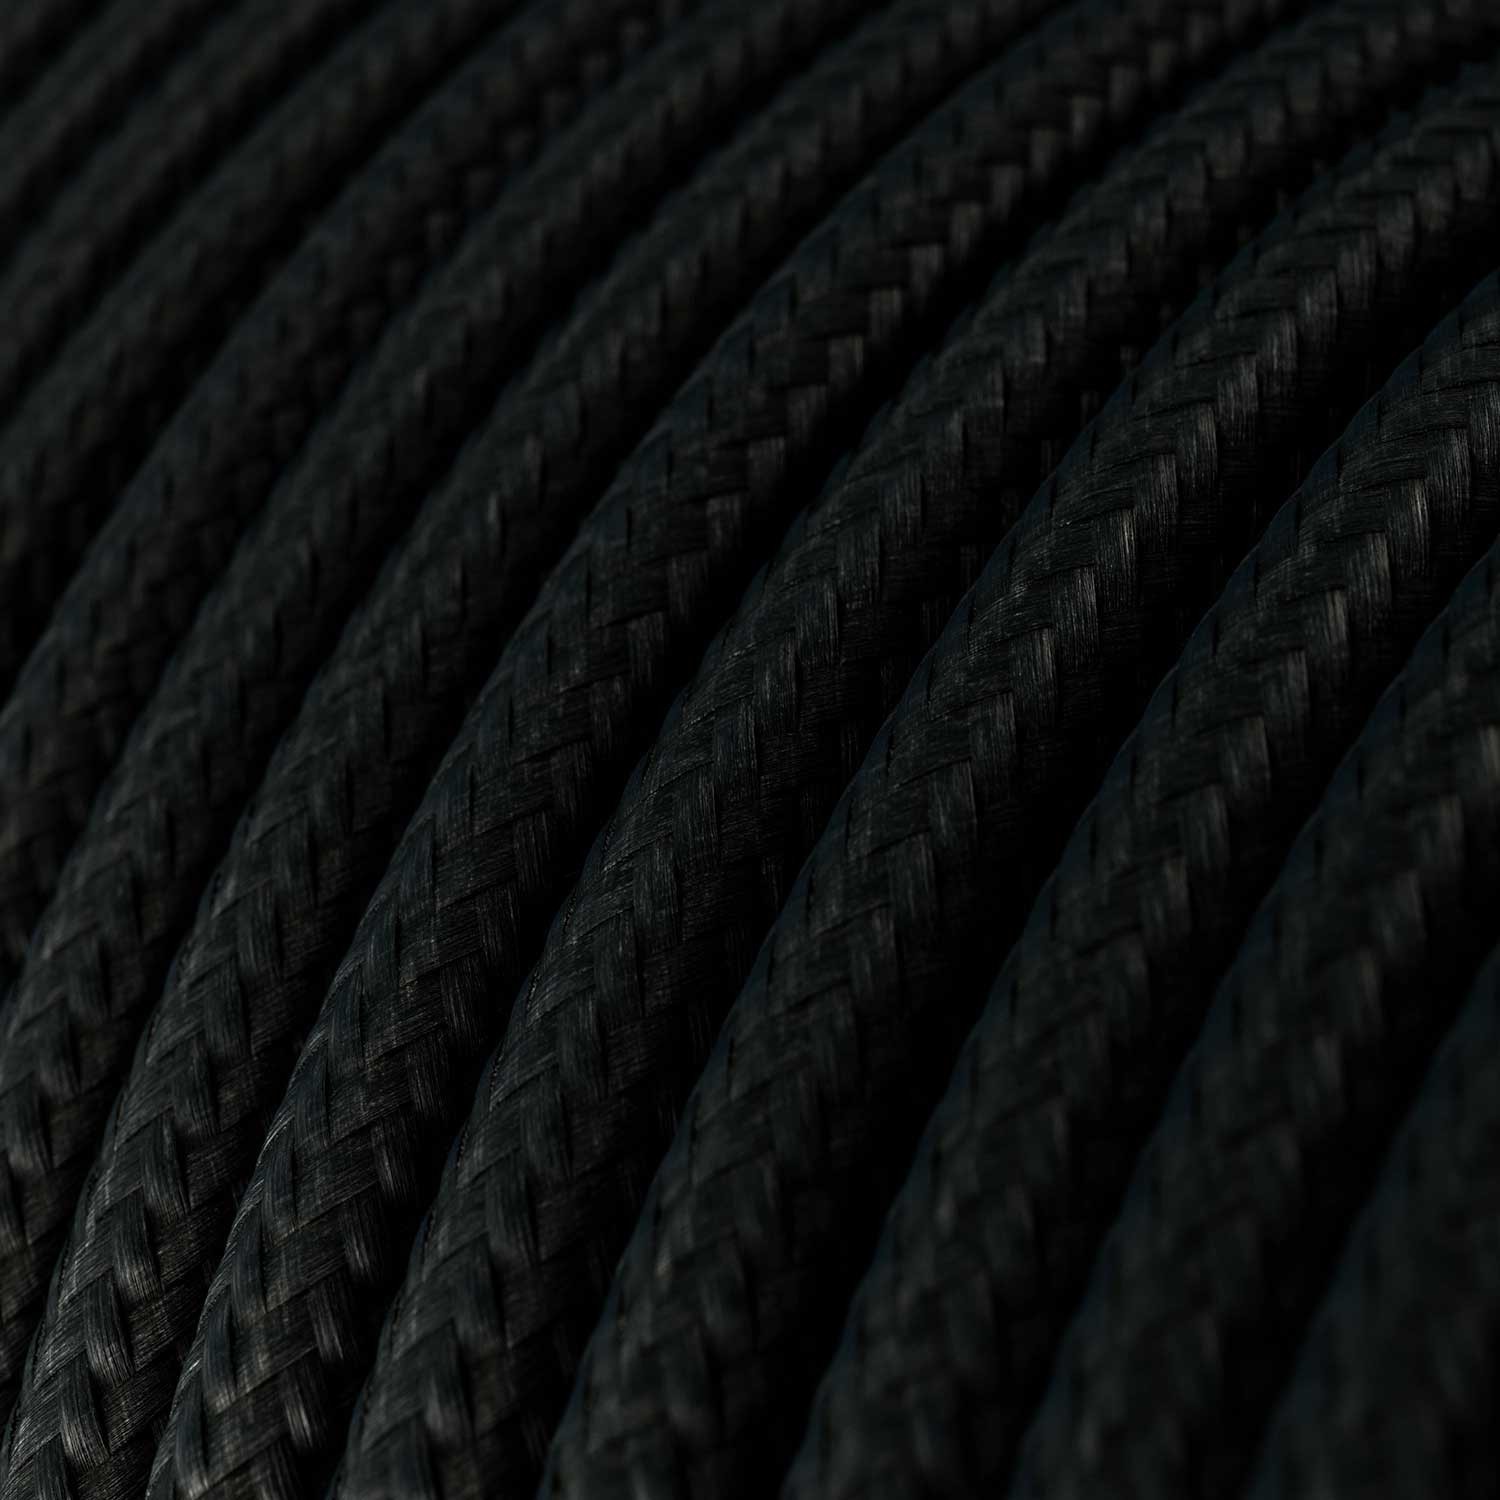 Ultra mekani silikonski električni kabel presvučen sjajnom karbon crnom tkaninom - RM04 okrugli 2x0,75 mm